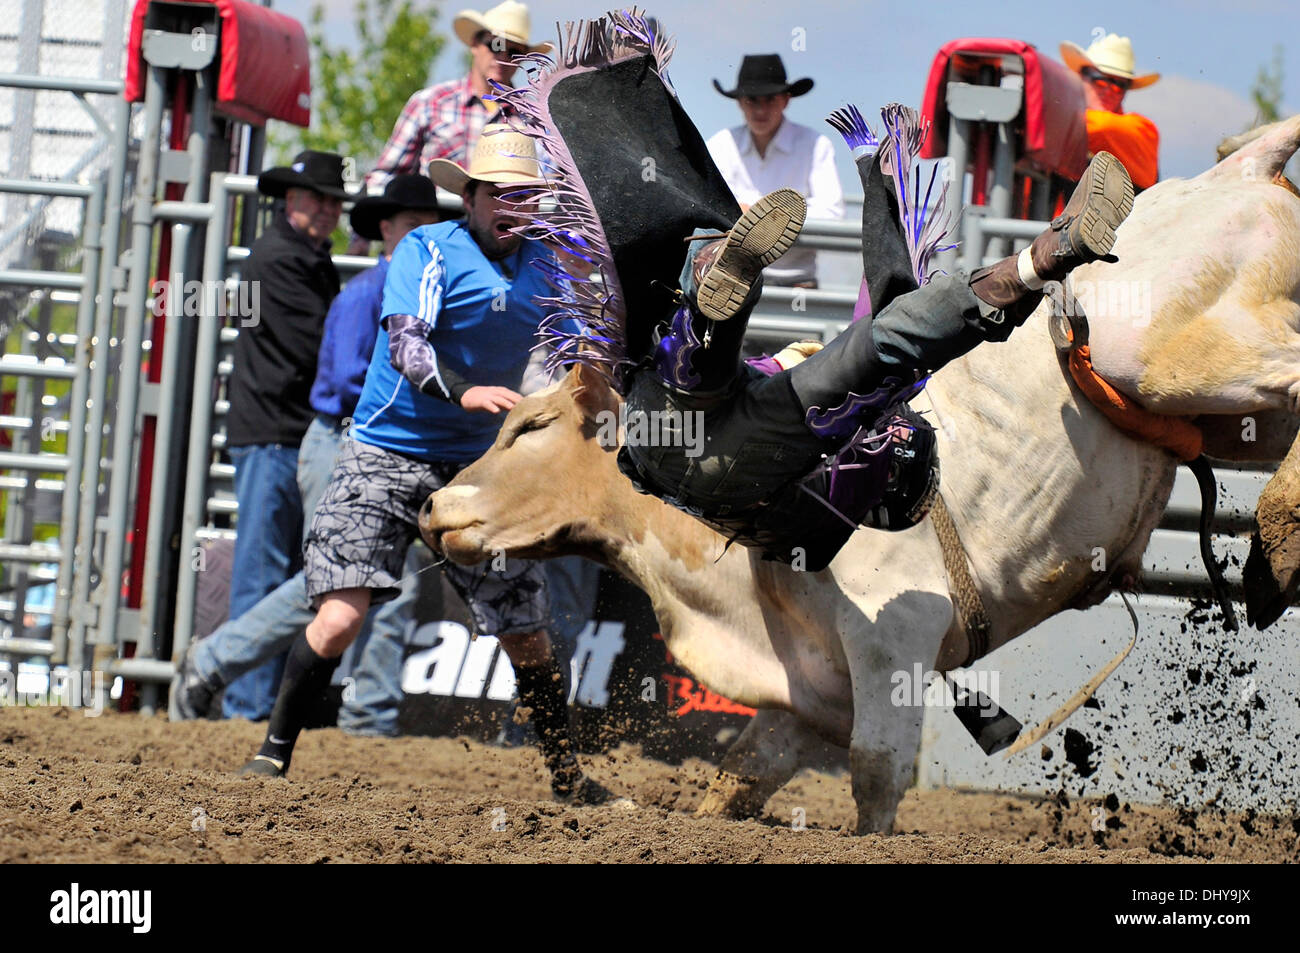 Un candidat à la circonscription de Bull s'effectue à partir d'un rodeo bucking bull à un rodéo de l'Alberta. Banque D'Images